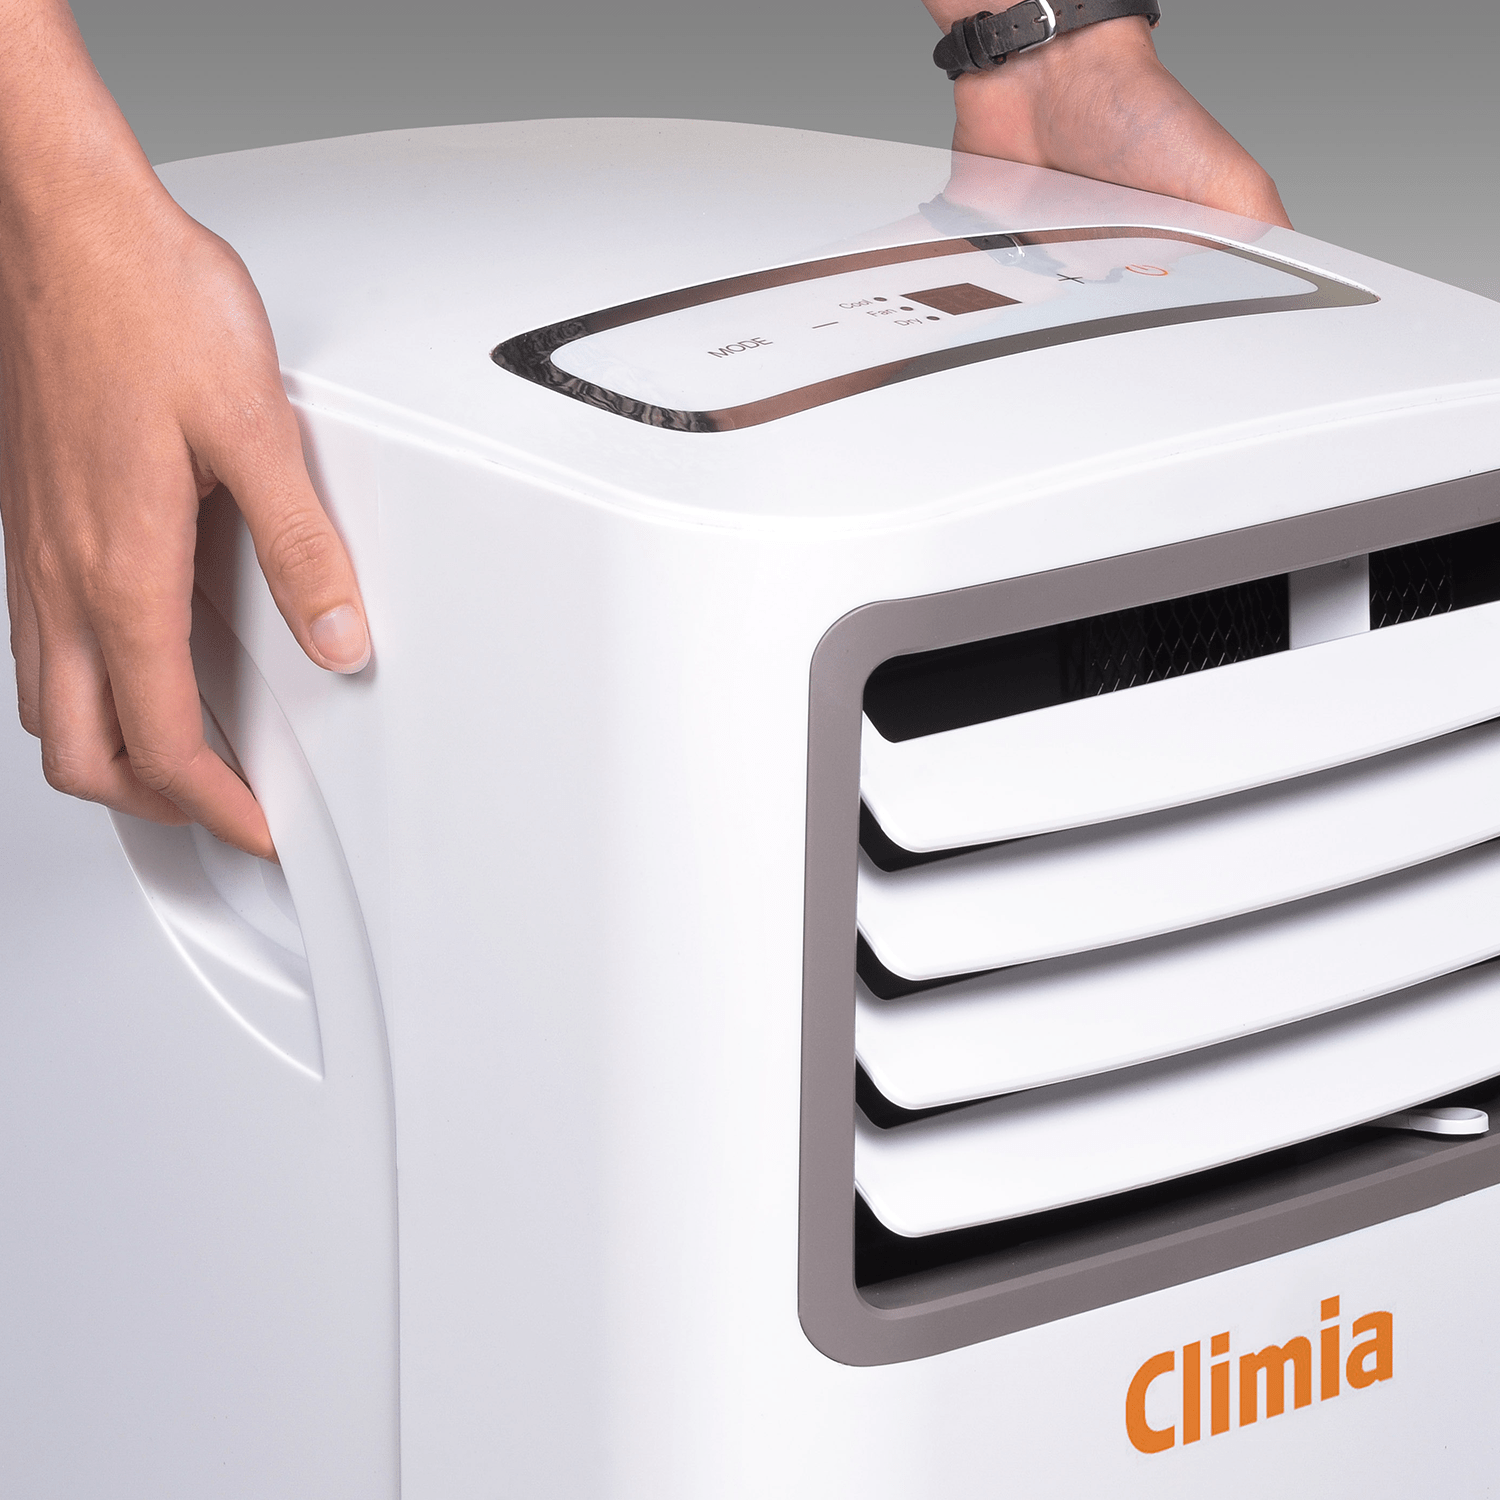 Climia CMK 2600 Sparpaket #5 - Klimagerät inkl. Fensteradapter  & Schutzhülle